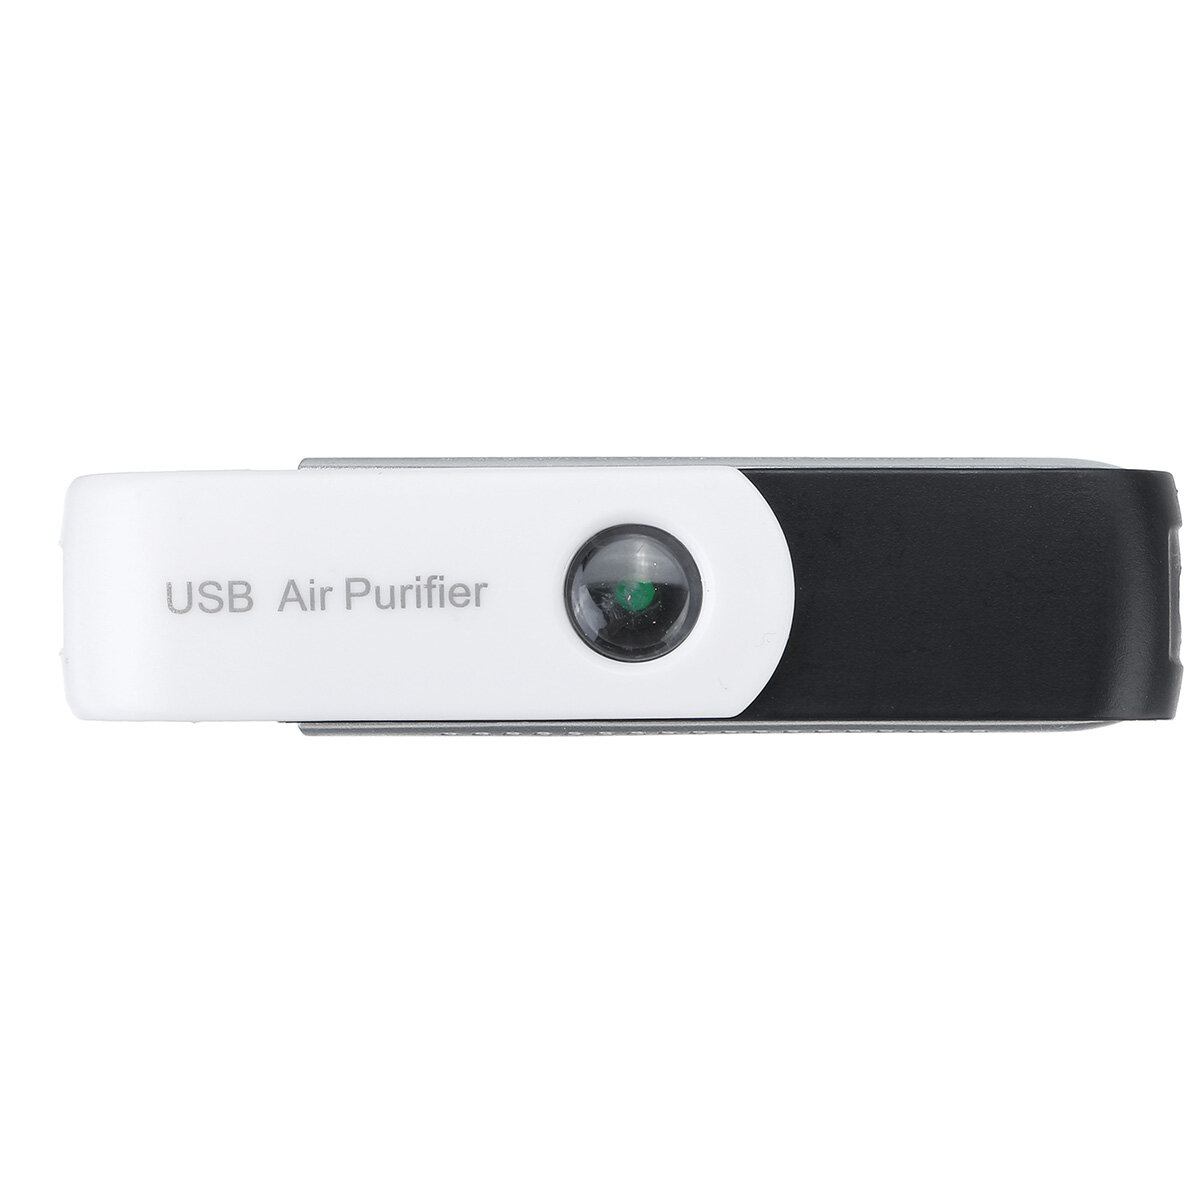 USB Air Purifier Active Oxygen Removal Formaldehyde Smoke Odor Sterilization